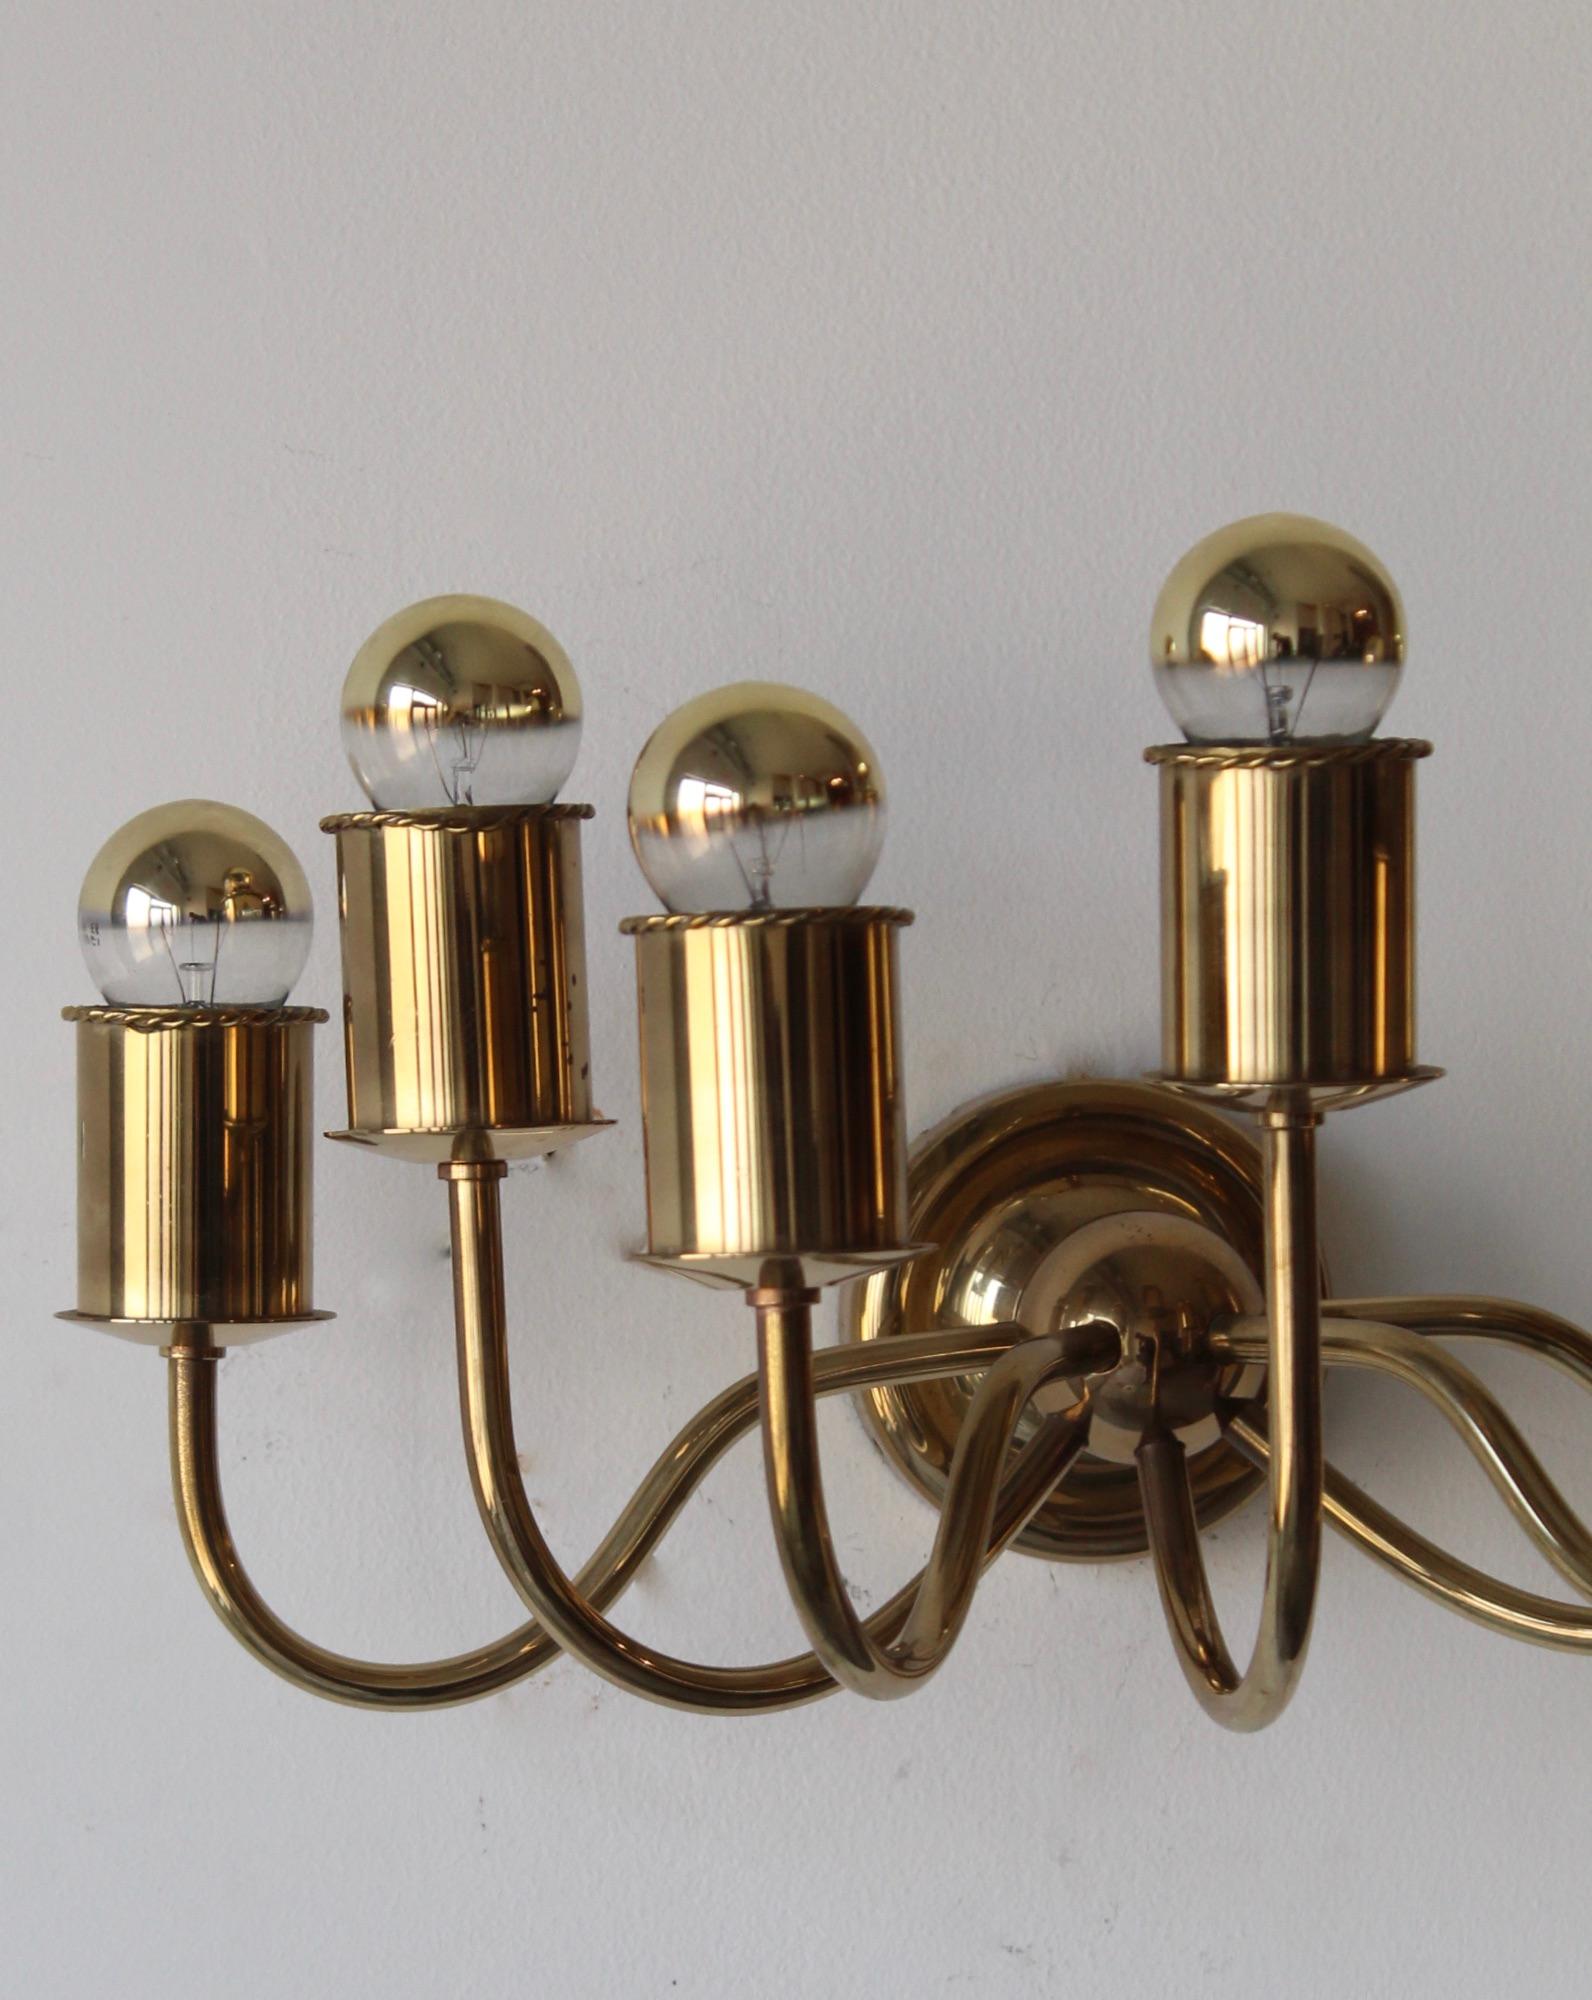 Swedish Josef Frank, 7-Armed Wall Light, Brass, Svenskt Tenn, Sweden 1920s